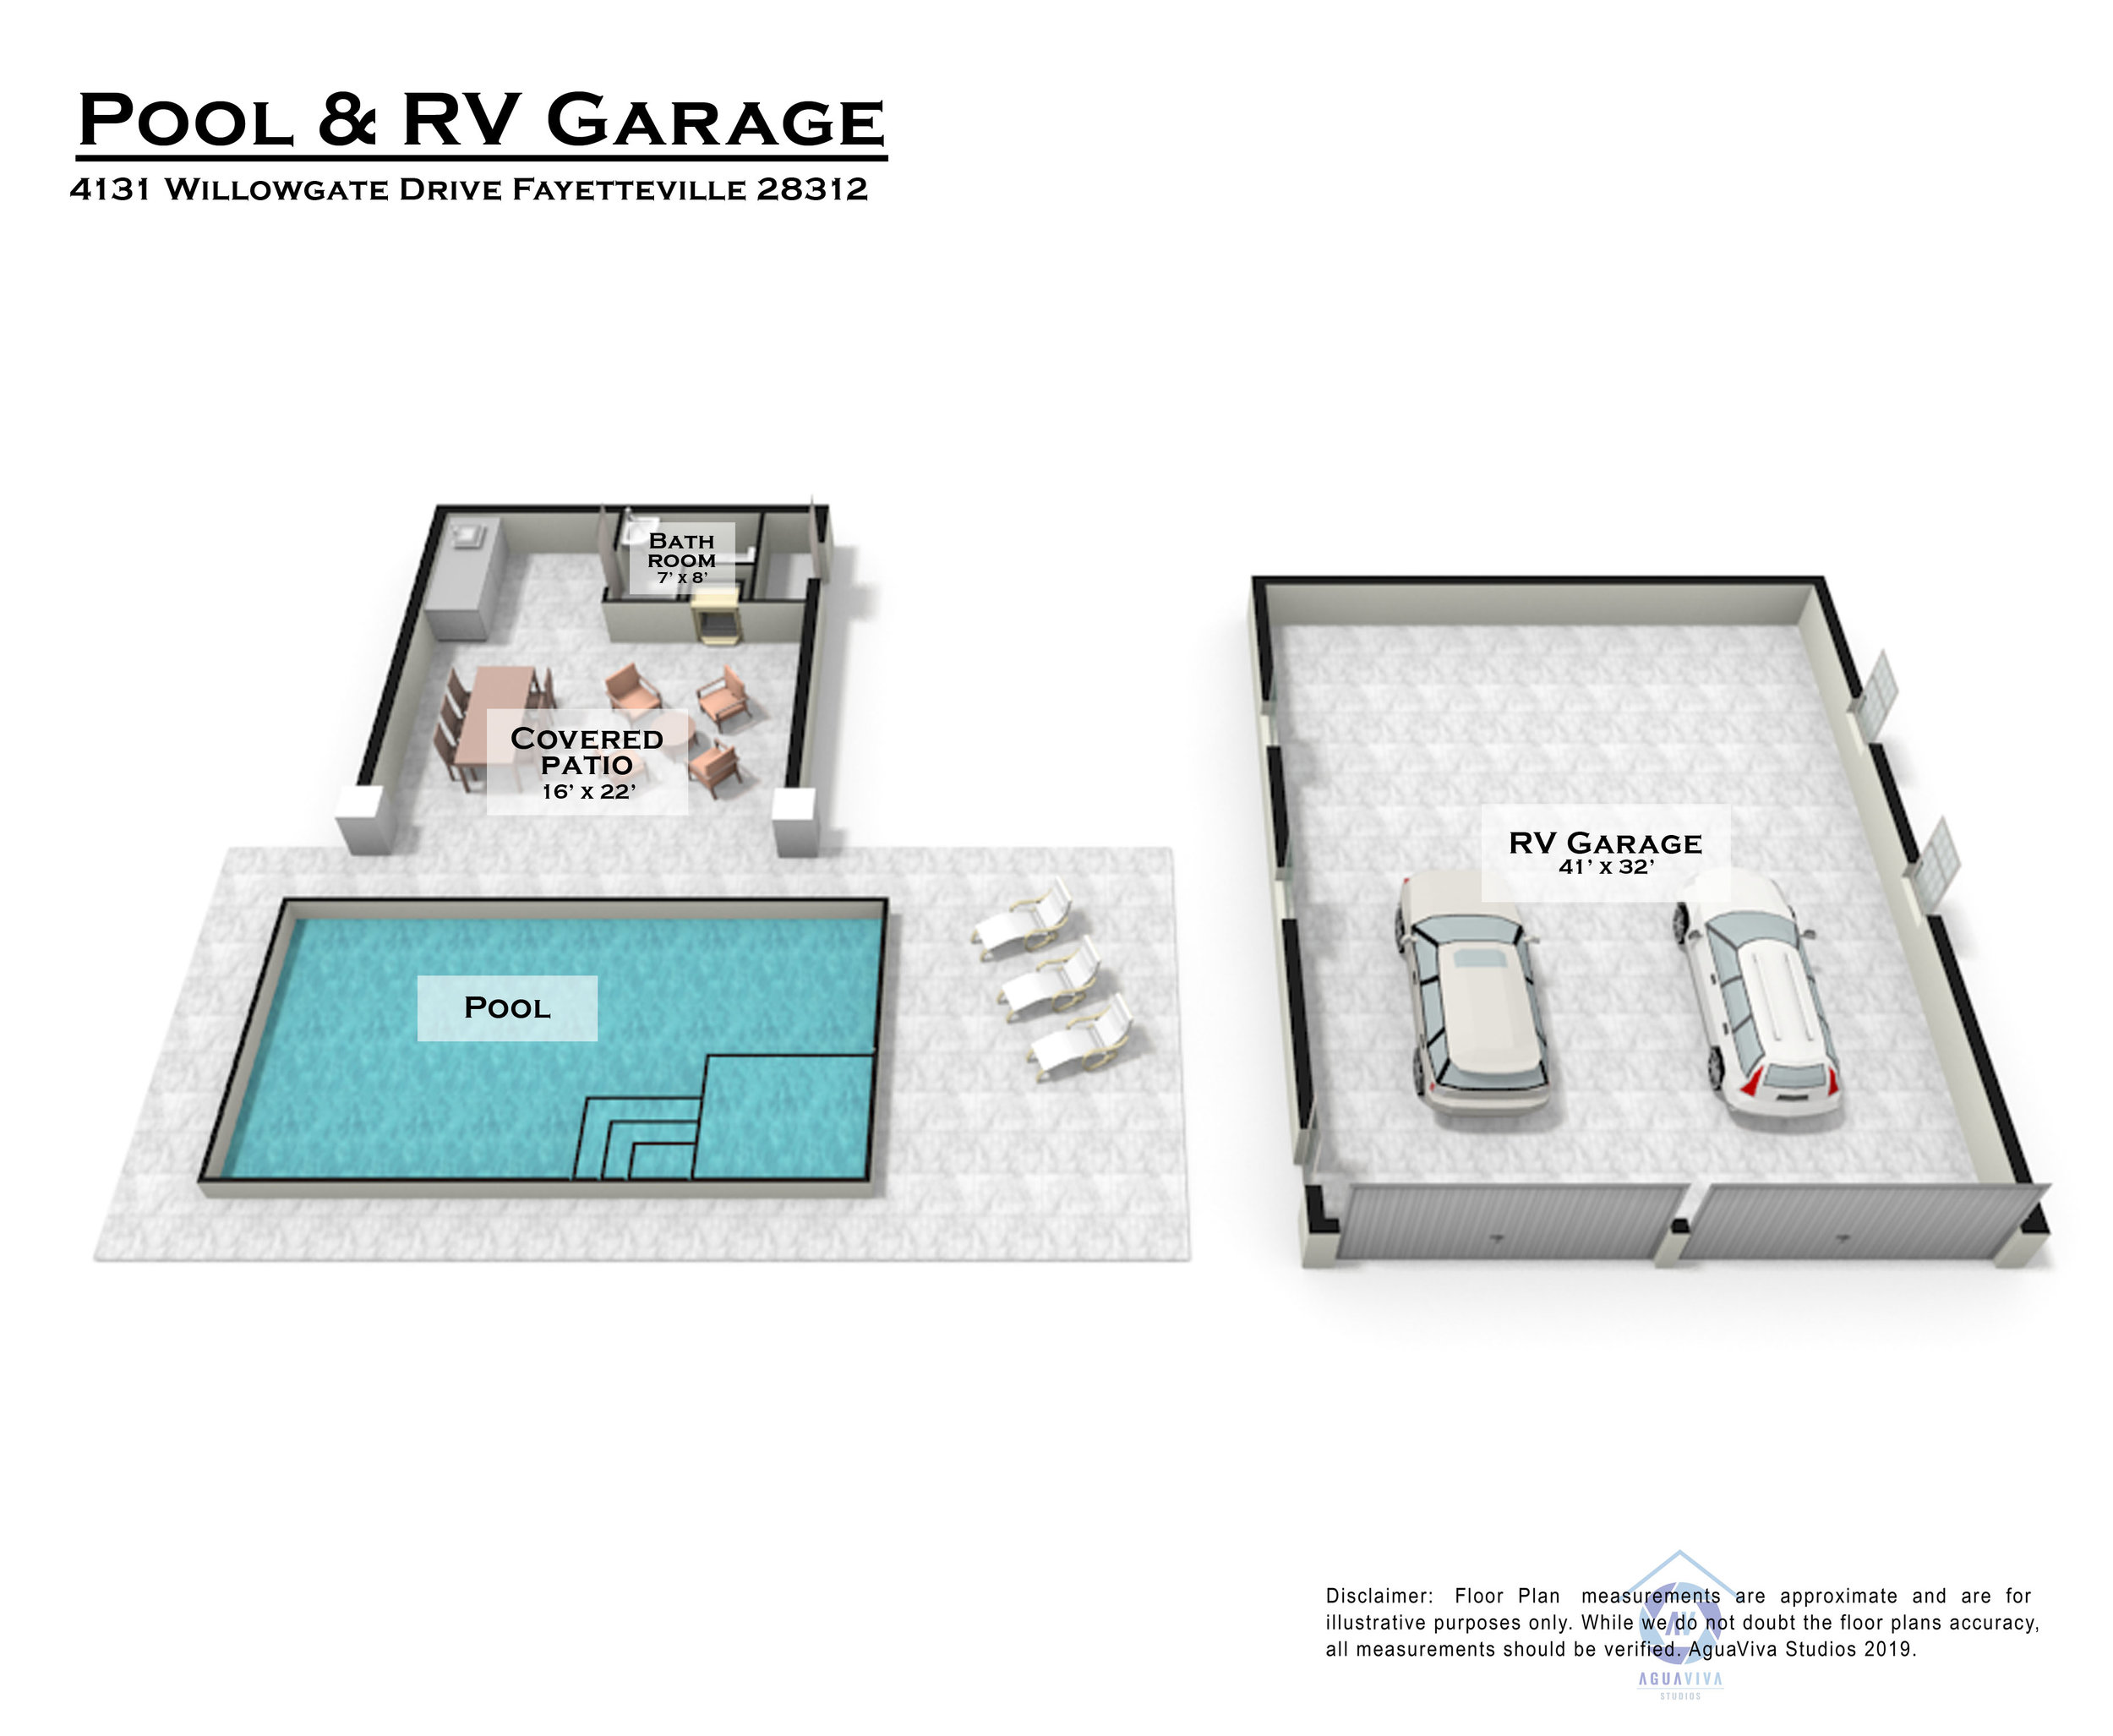 Pool & RV Garage Furnished.jpg